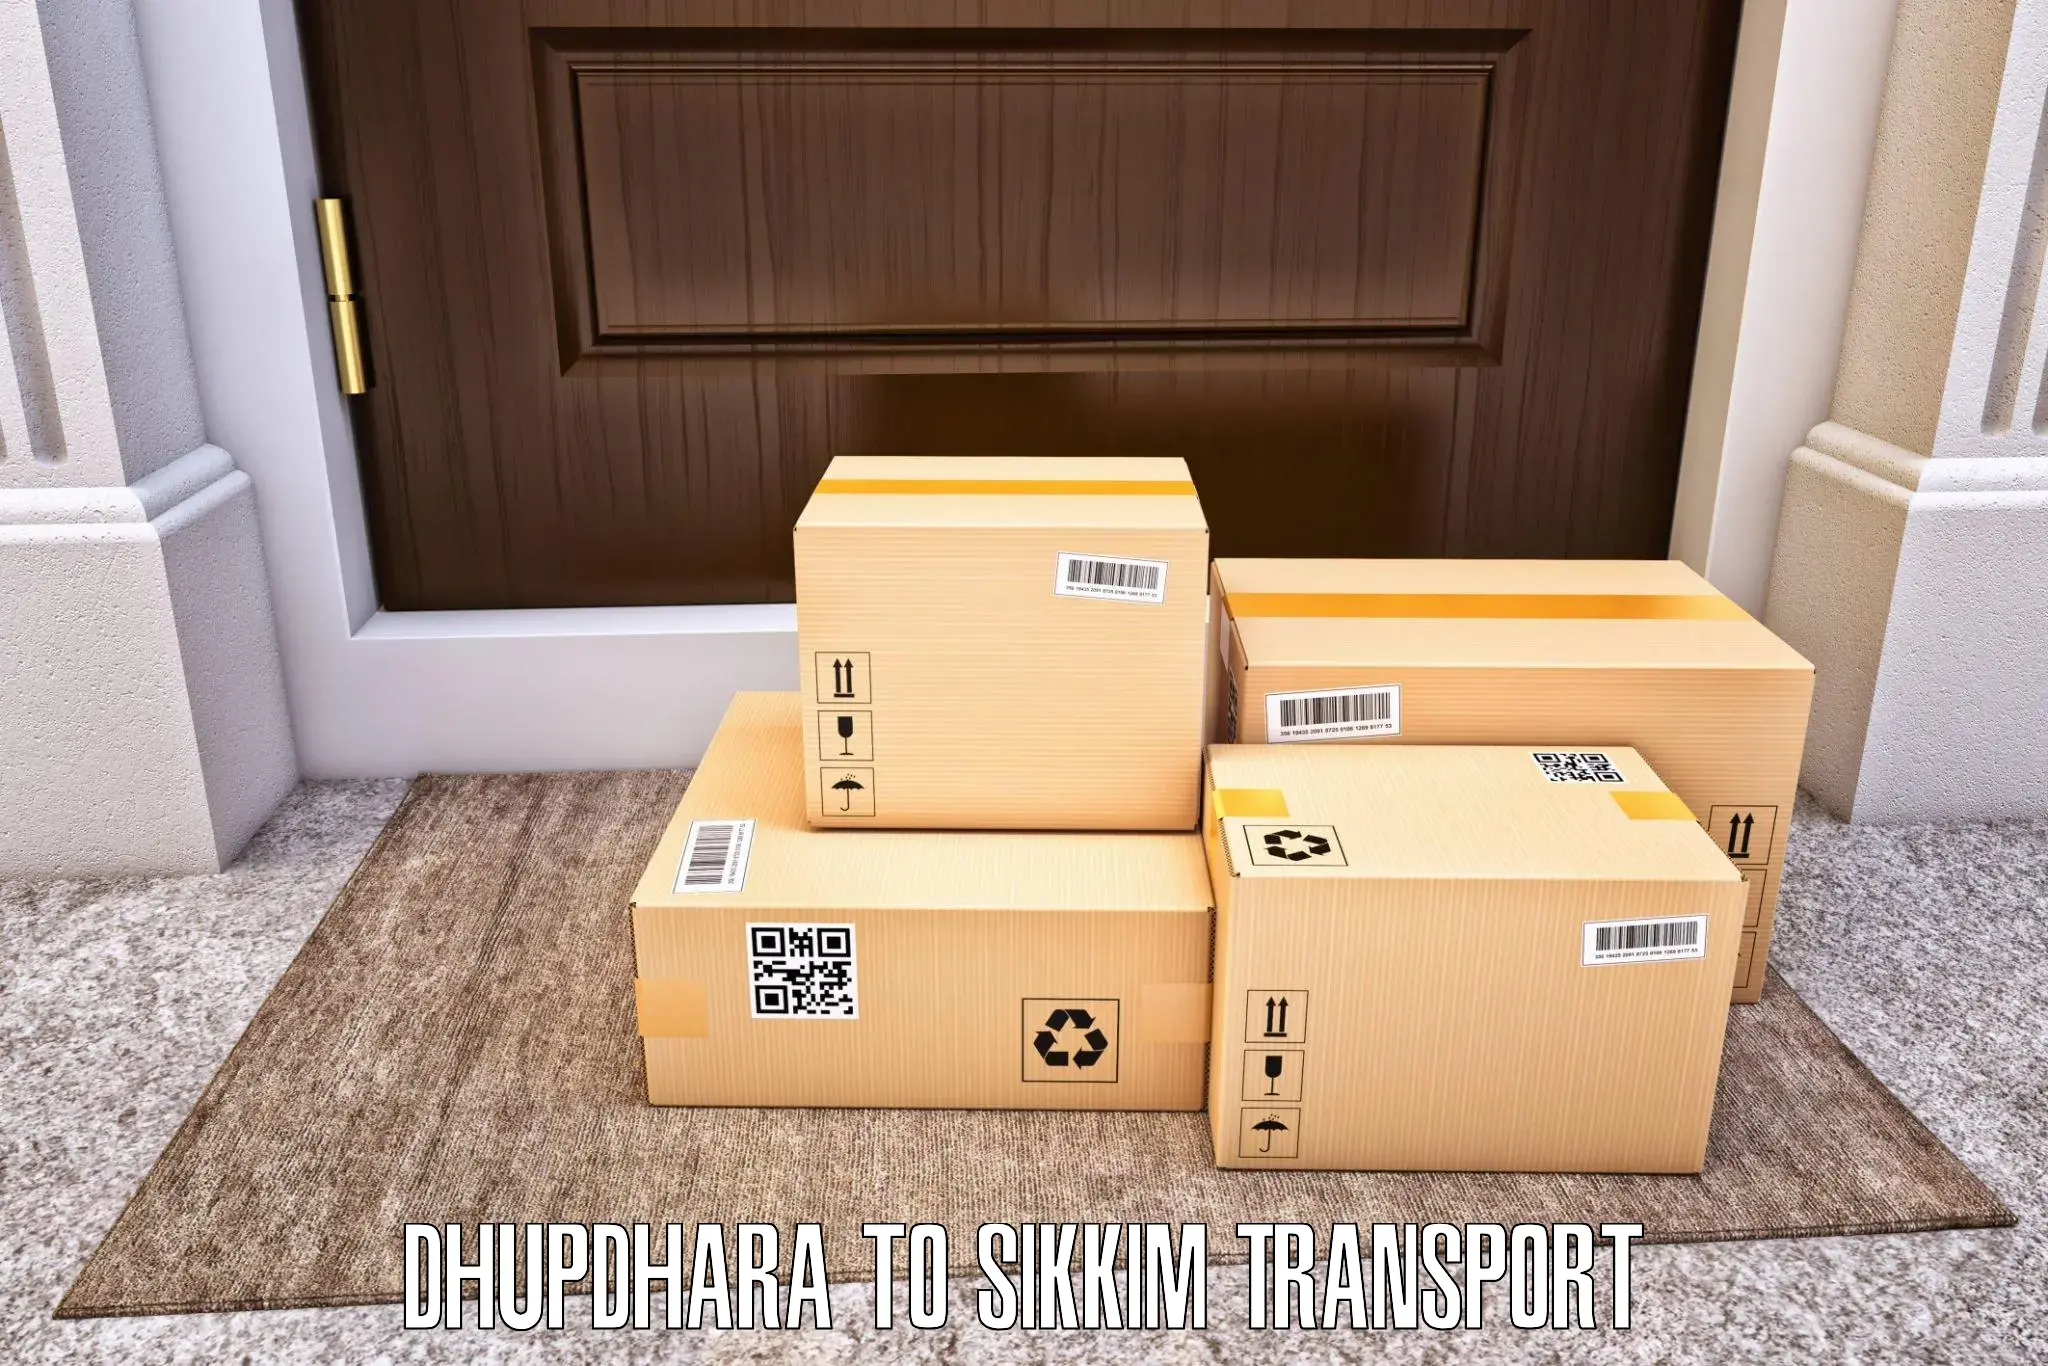 Shipping services Dhupdhara to Rangpo